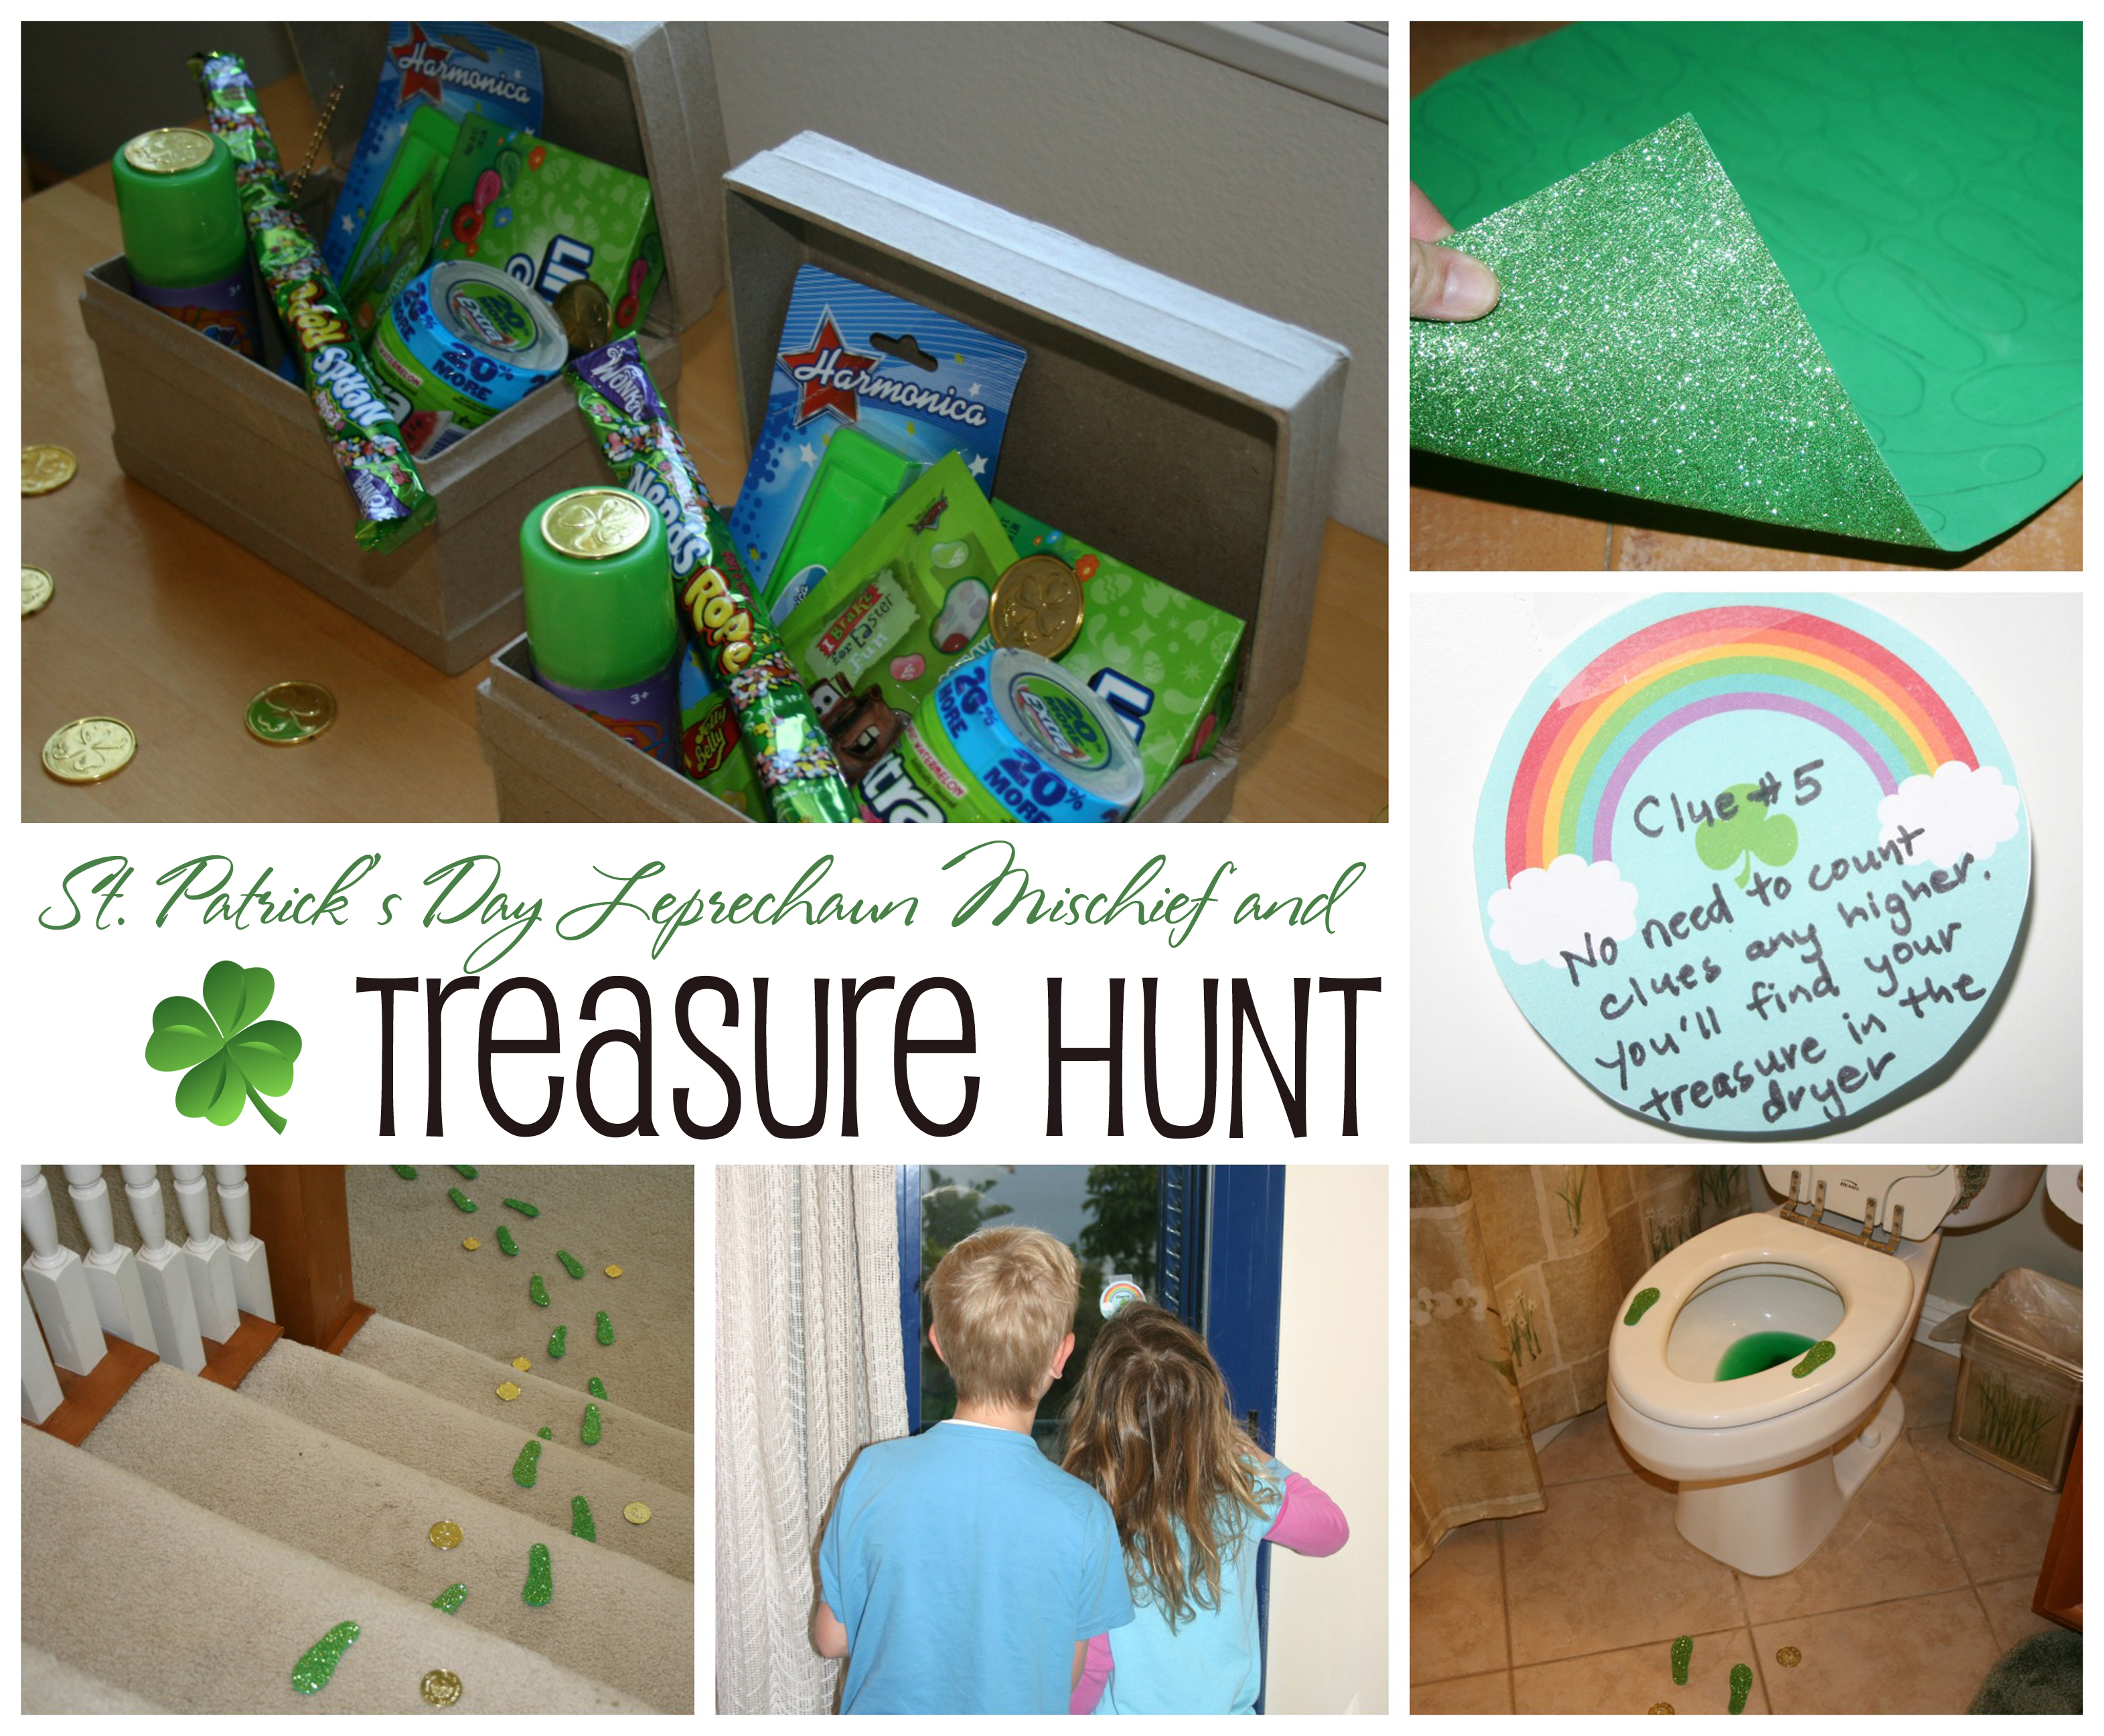 Saint Patrick's Day Treasure Hunt and Leprechaun Mischief